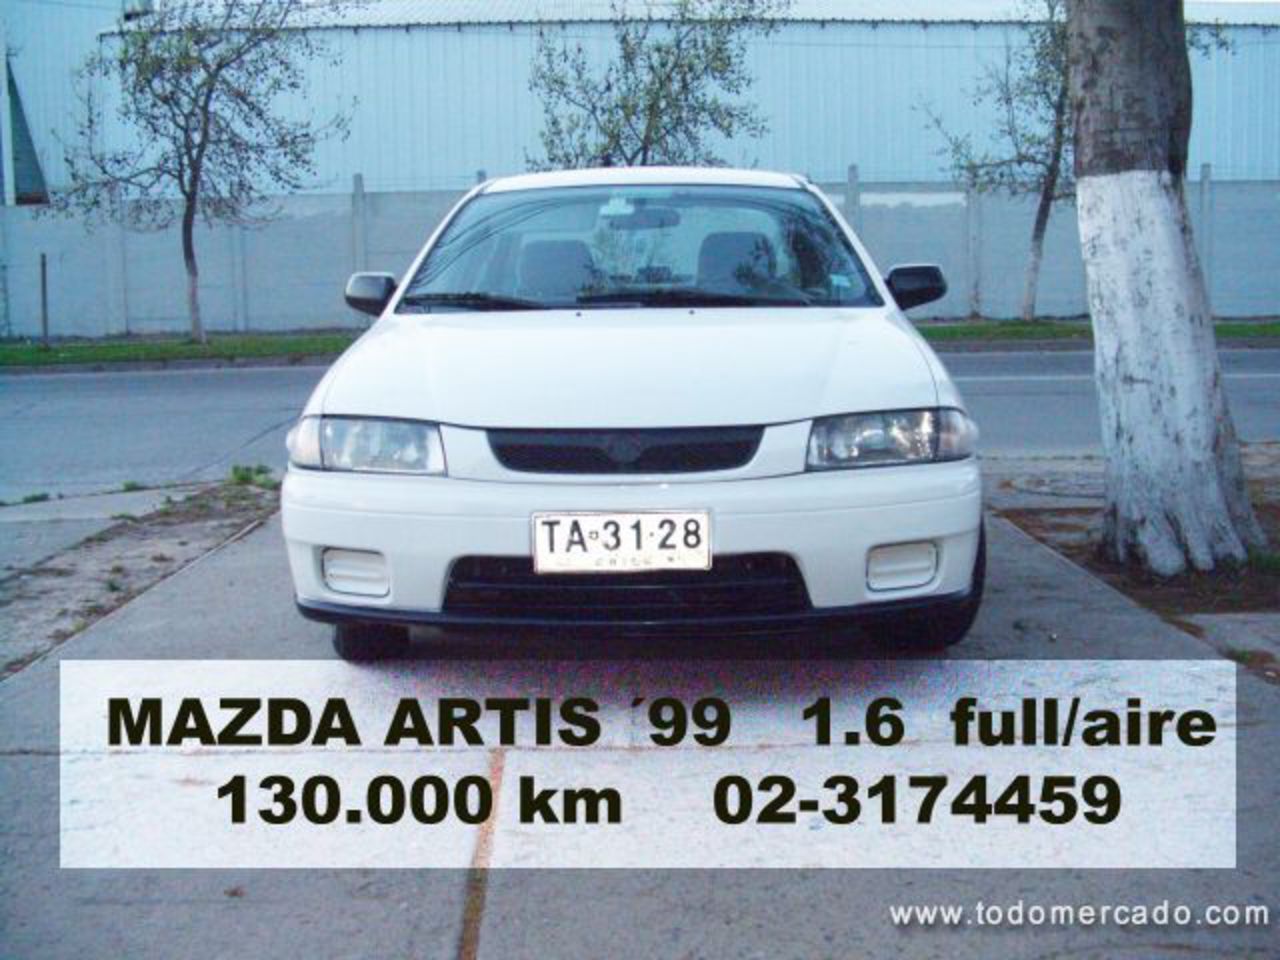 Mazda Artis 16 Sedan. View Download Wallpaper. 640x480. Comments